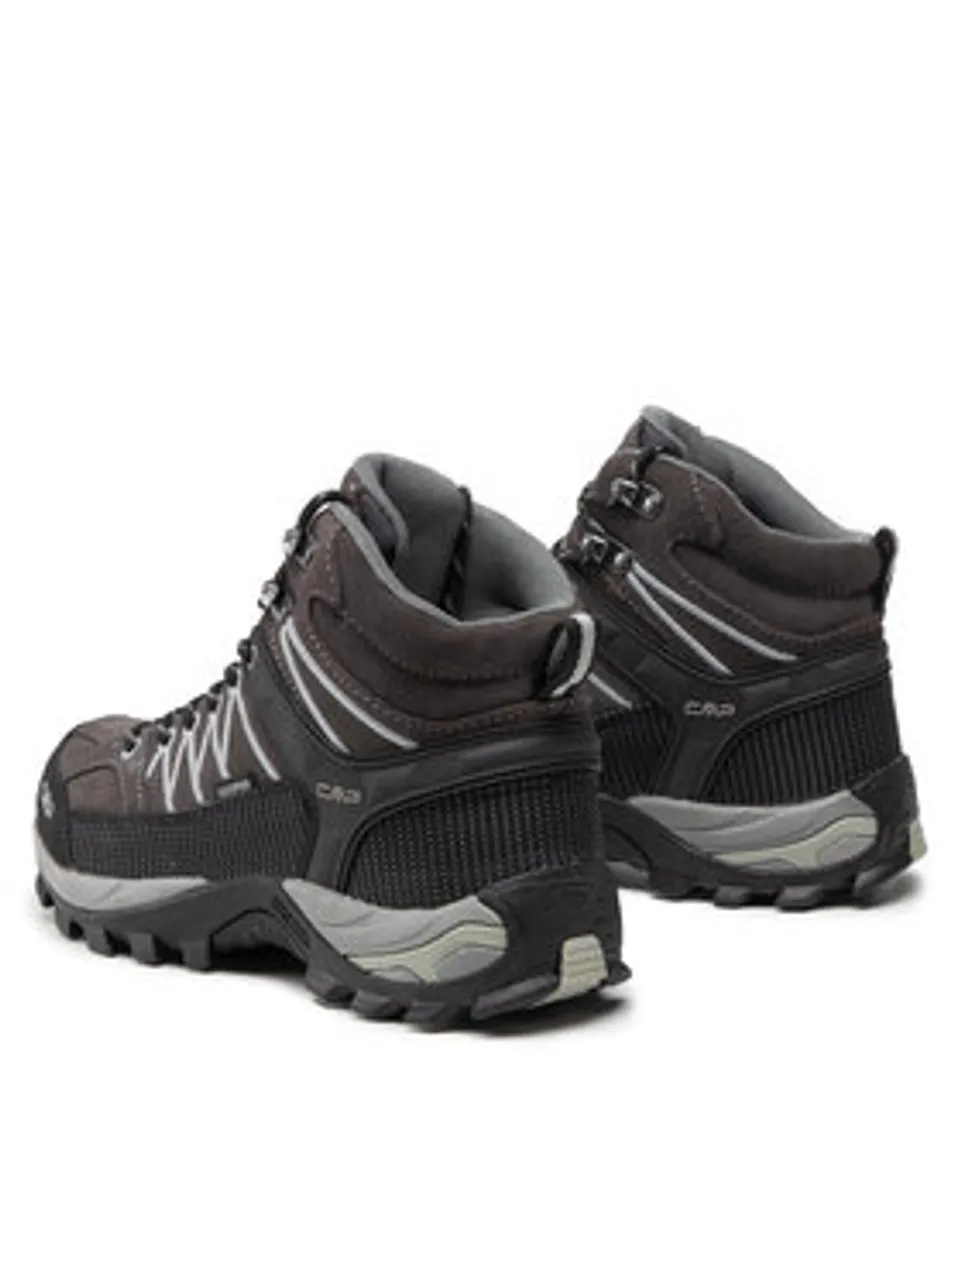 CMP Trekkingschuhe Rigel Mid Trekking Shoes Wp 3Q12947 Grau